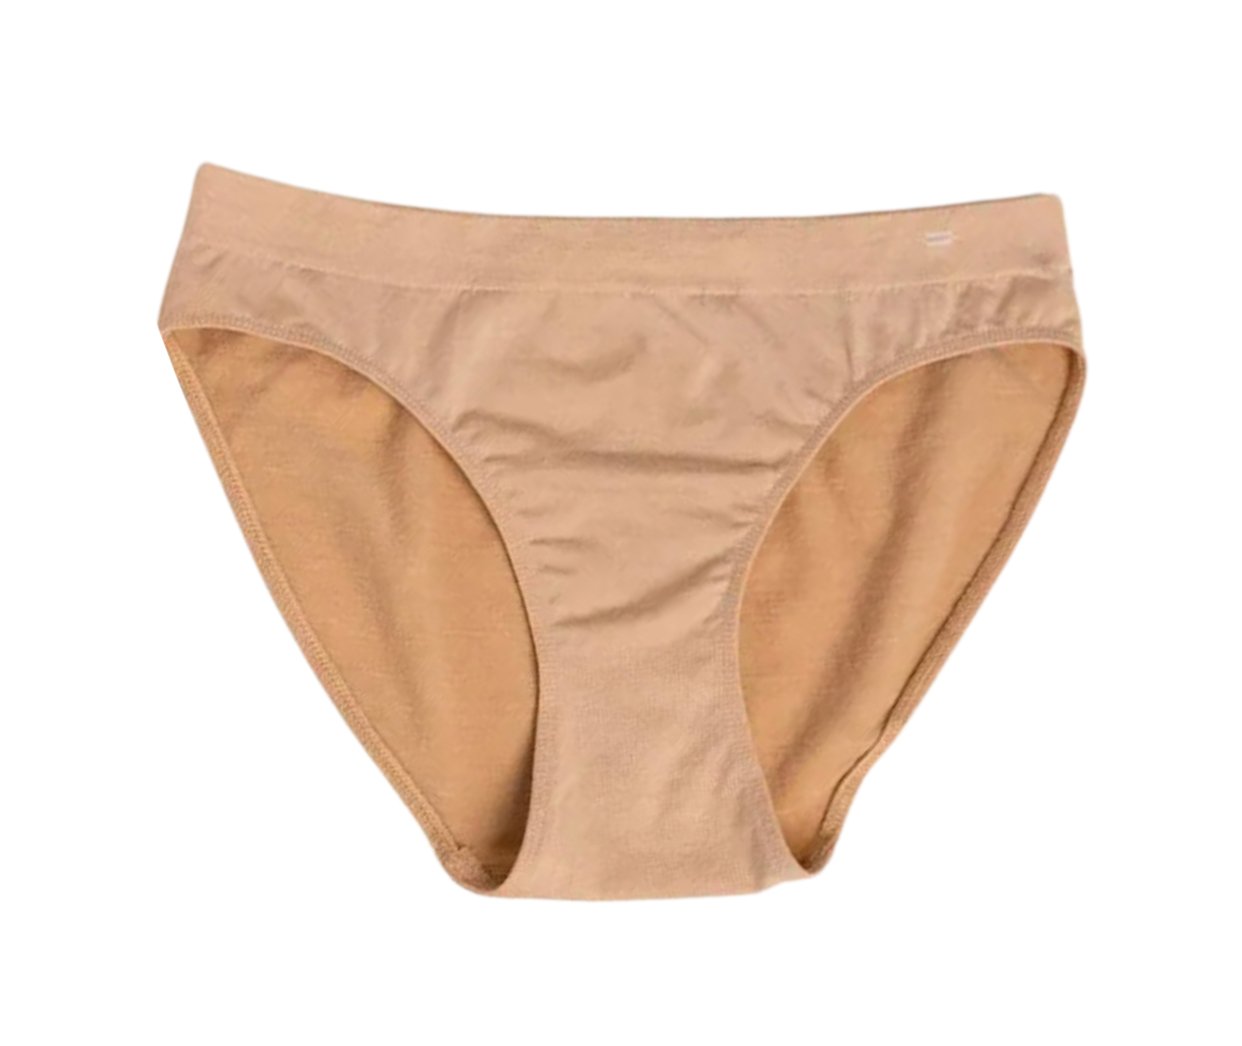 QAUNBU Hiking Underwear Women Boy Shorts Hot Girls Sexy Panty